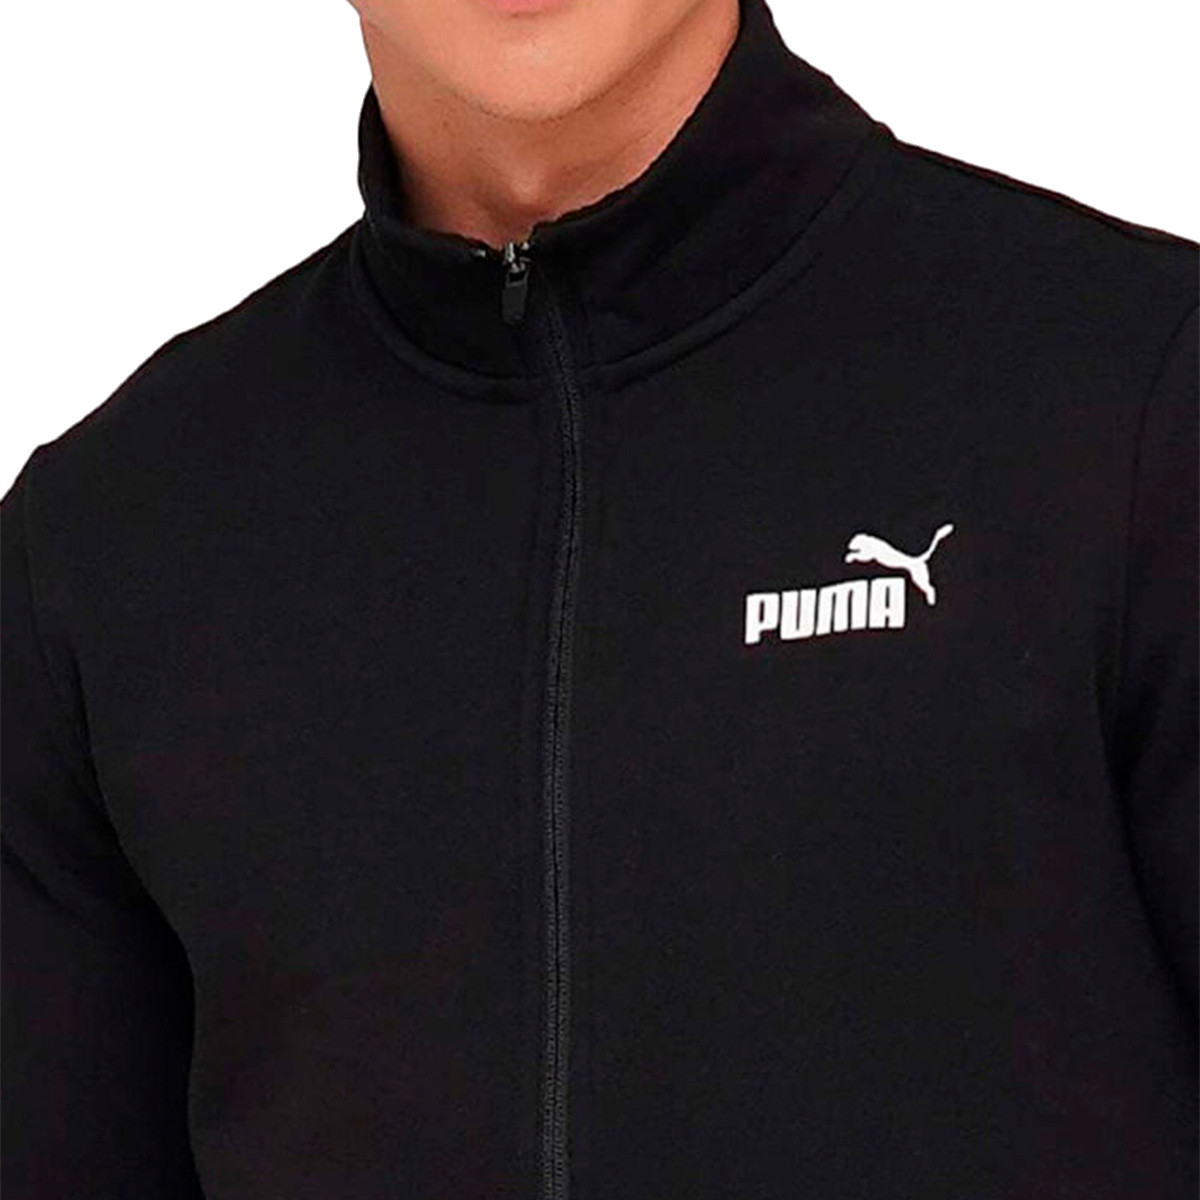 Chándal Puma Clean Sweat Black Fútbol